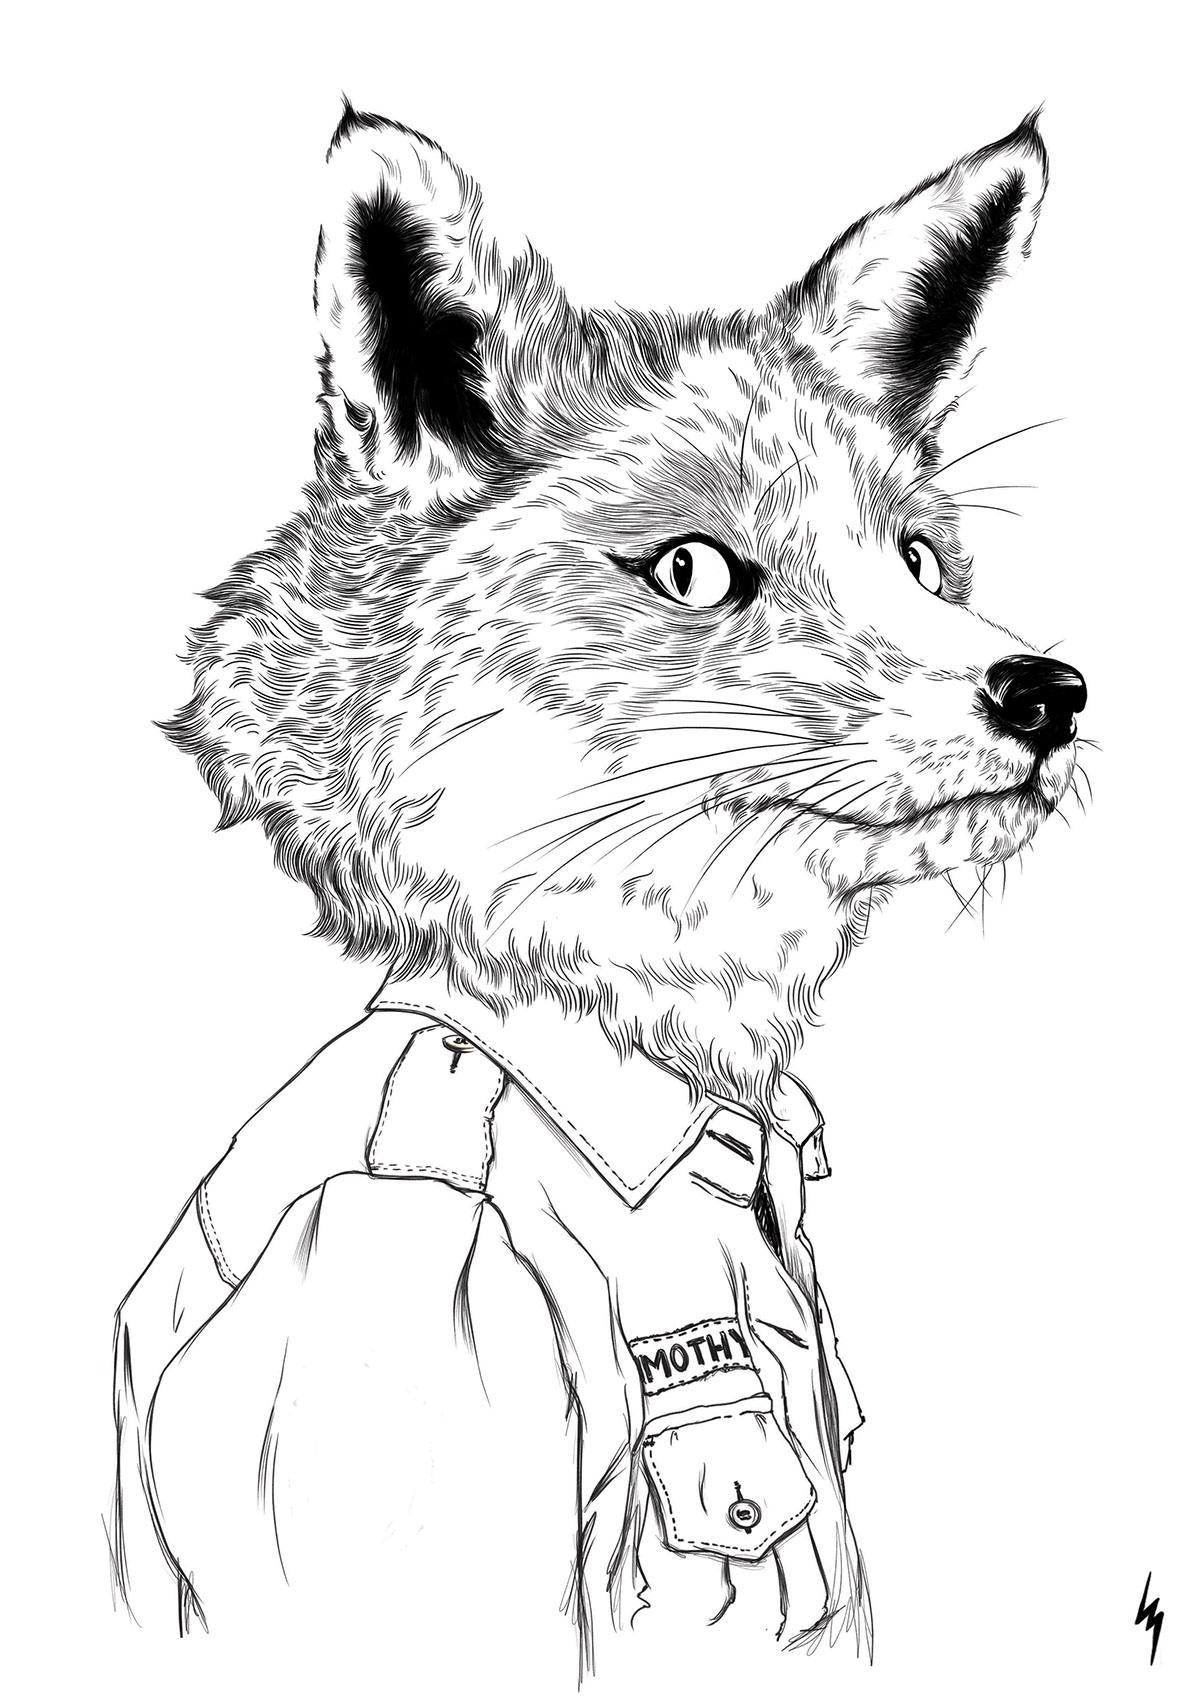 misters mr fox freehand illustration wacom animals portraits FOX